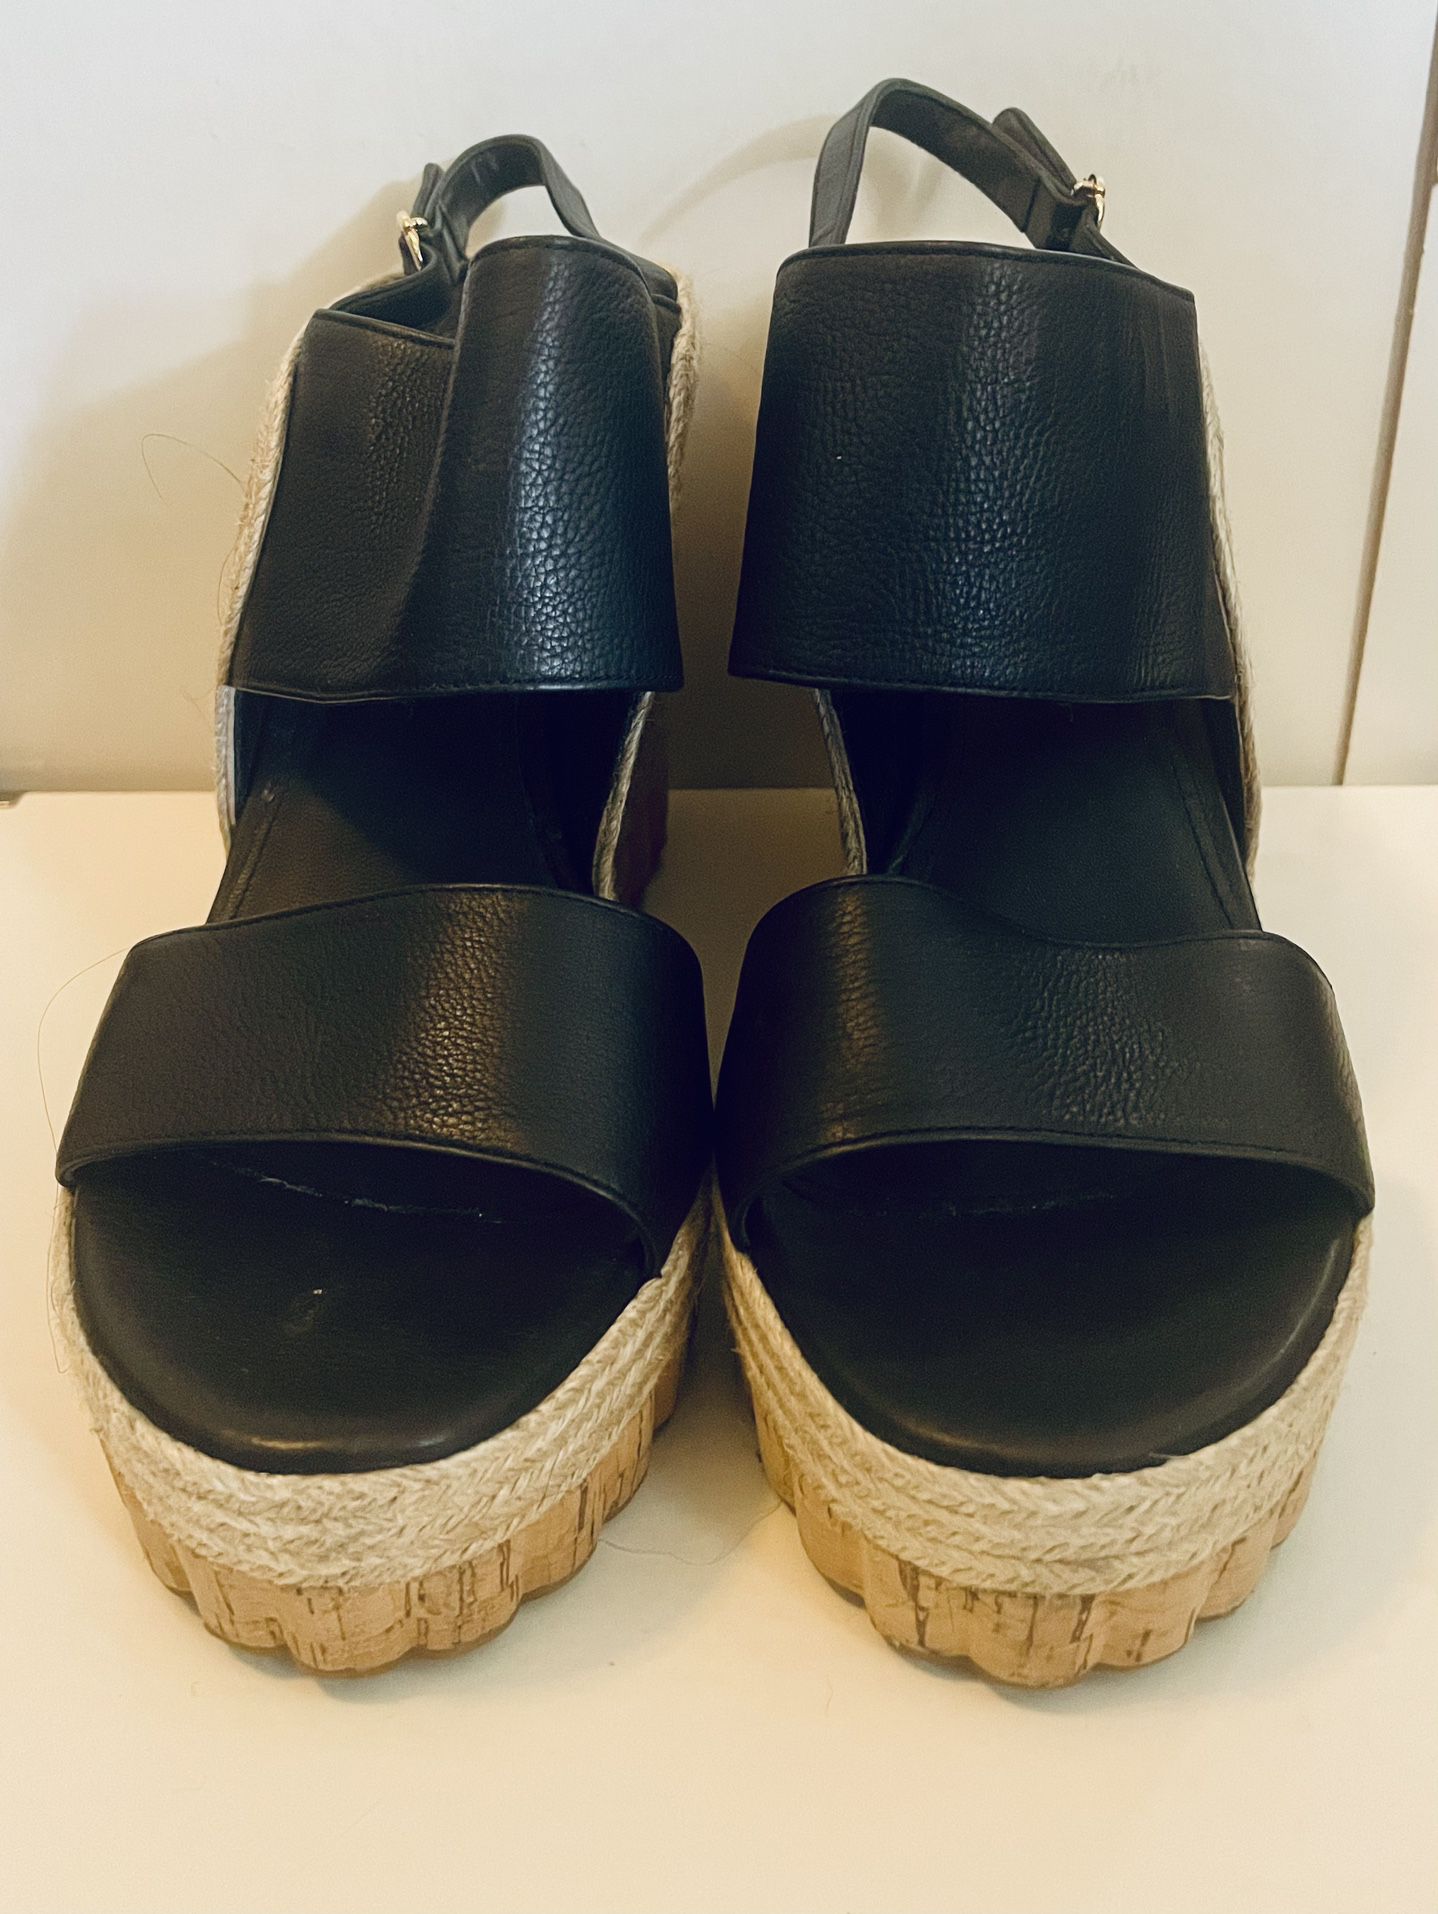 Salvatore Ferragamo 'Maratea' Black Leather Espadrille Wedge Sandal- US size 8.5